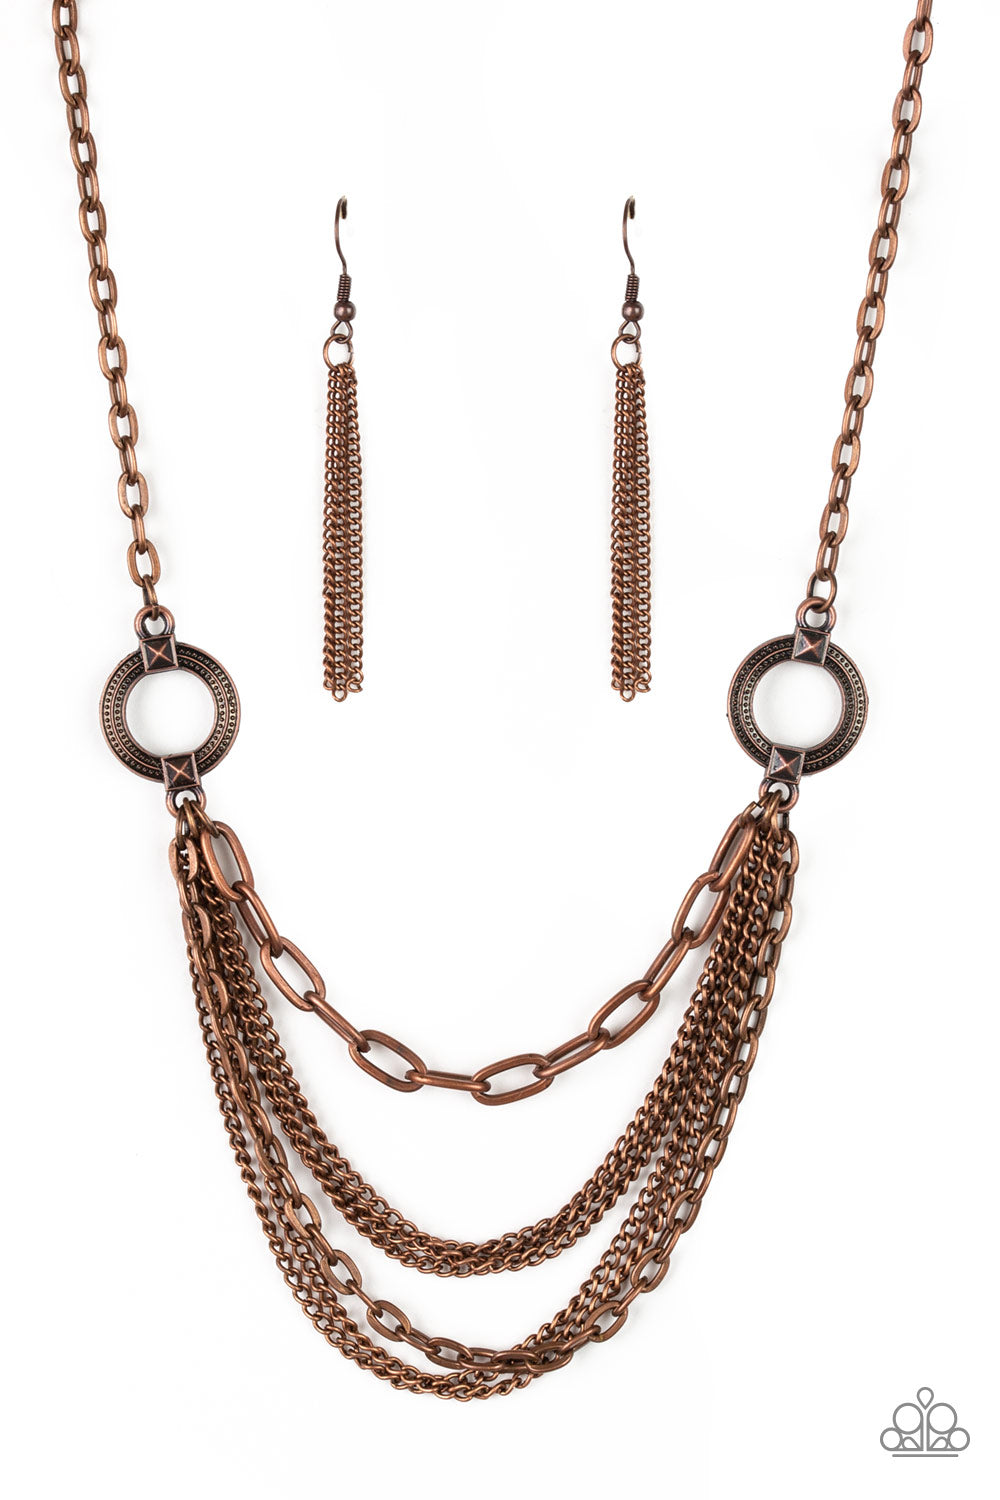 Xiazw Mini Copper Purse Chains